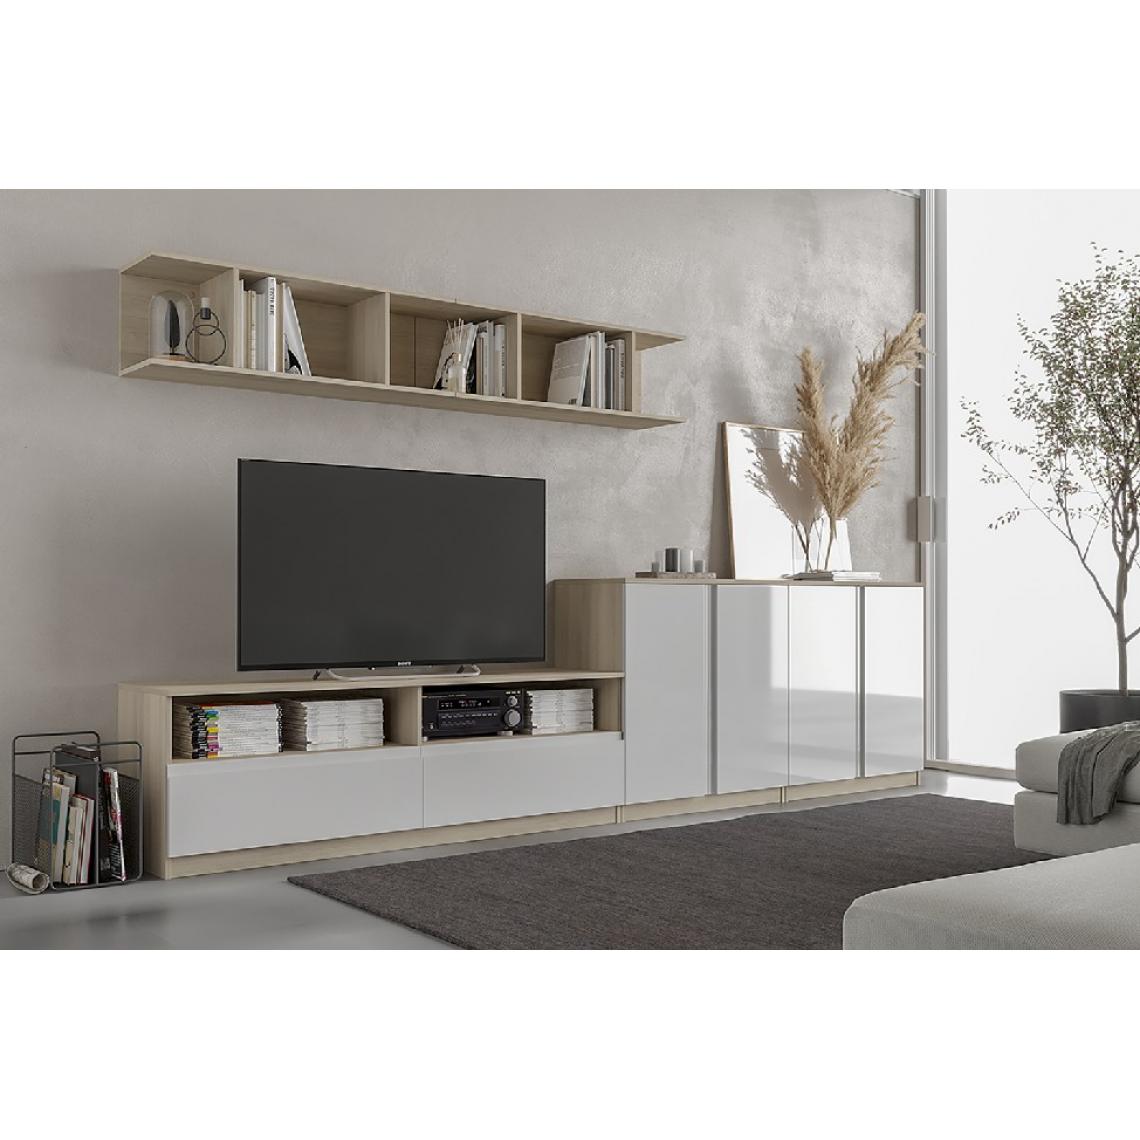 Homemania - HOMEMANIA Meuble TV Mik - Bois, Blanc - 160 x 44,5 x 53,5 cm - Meubles TV, Hi-Fi